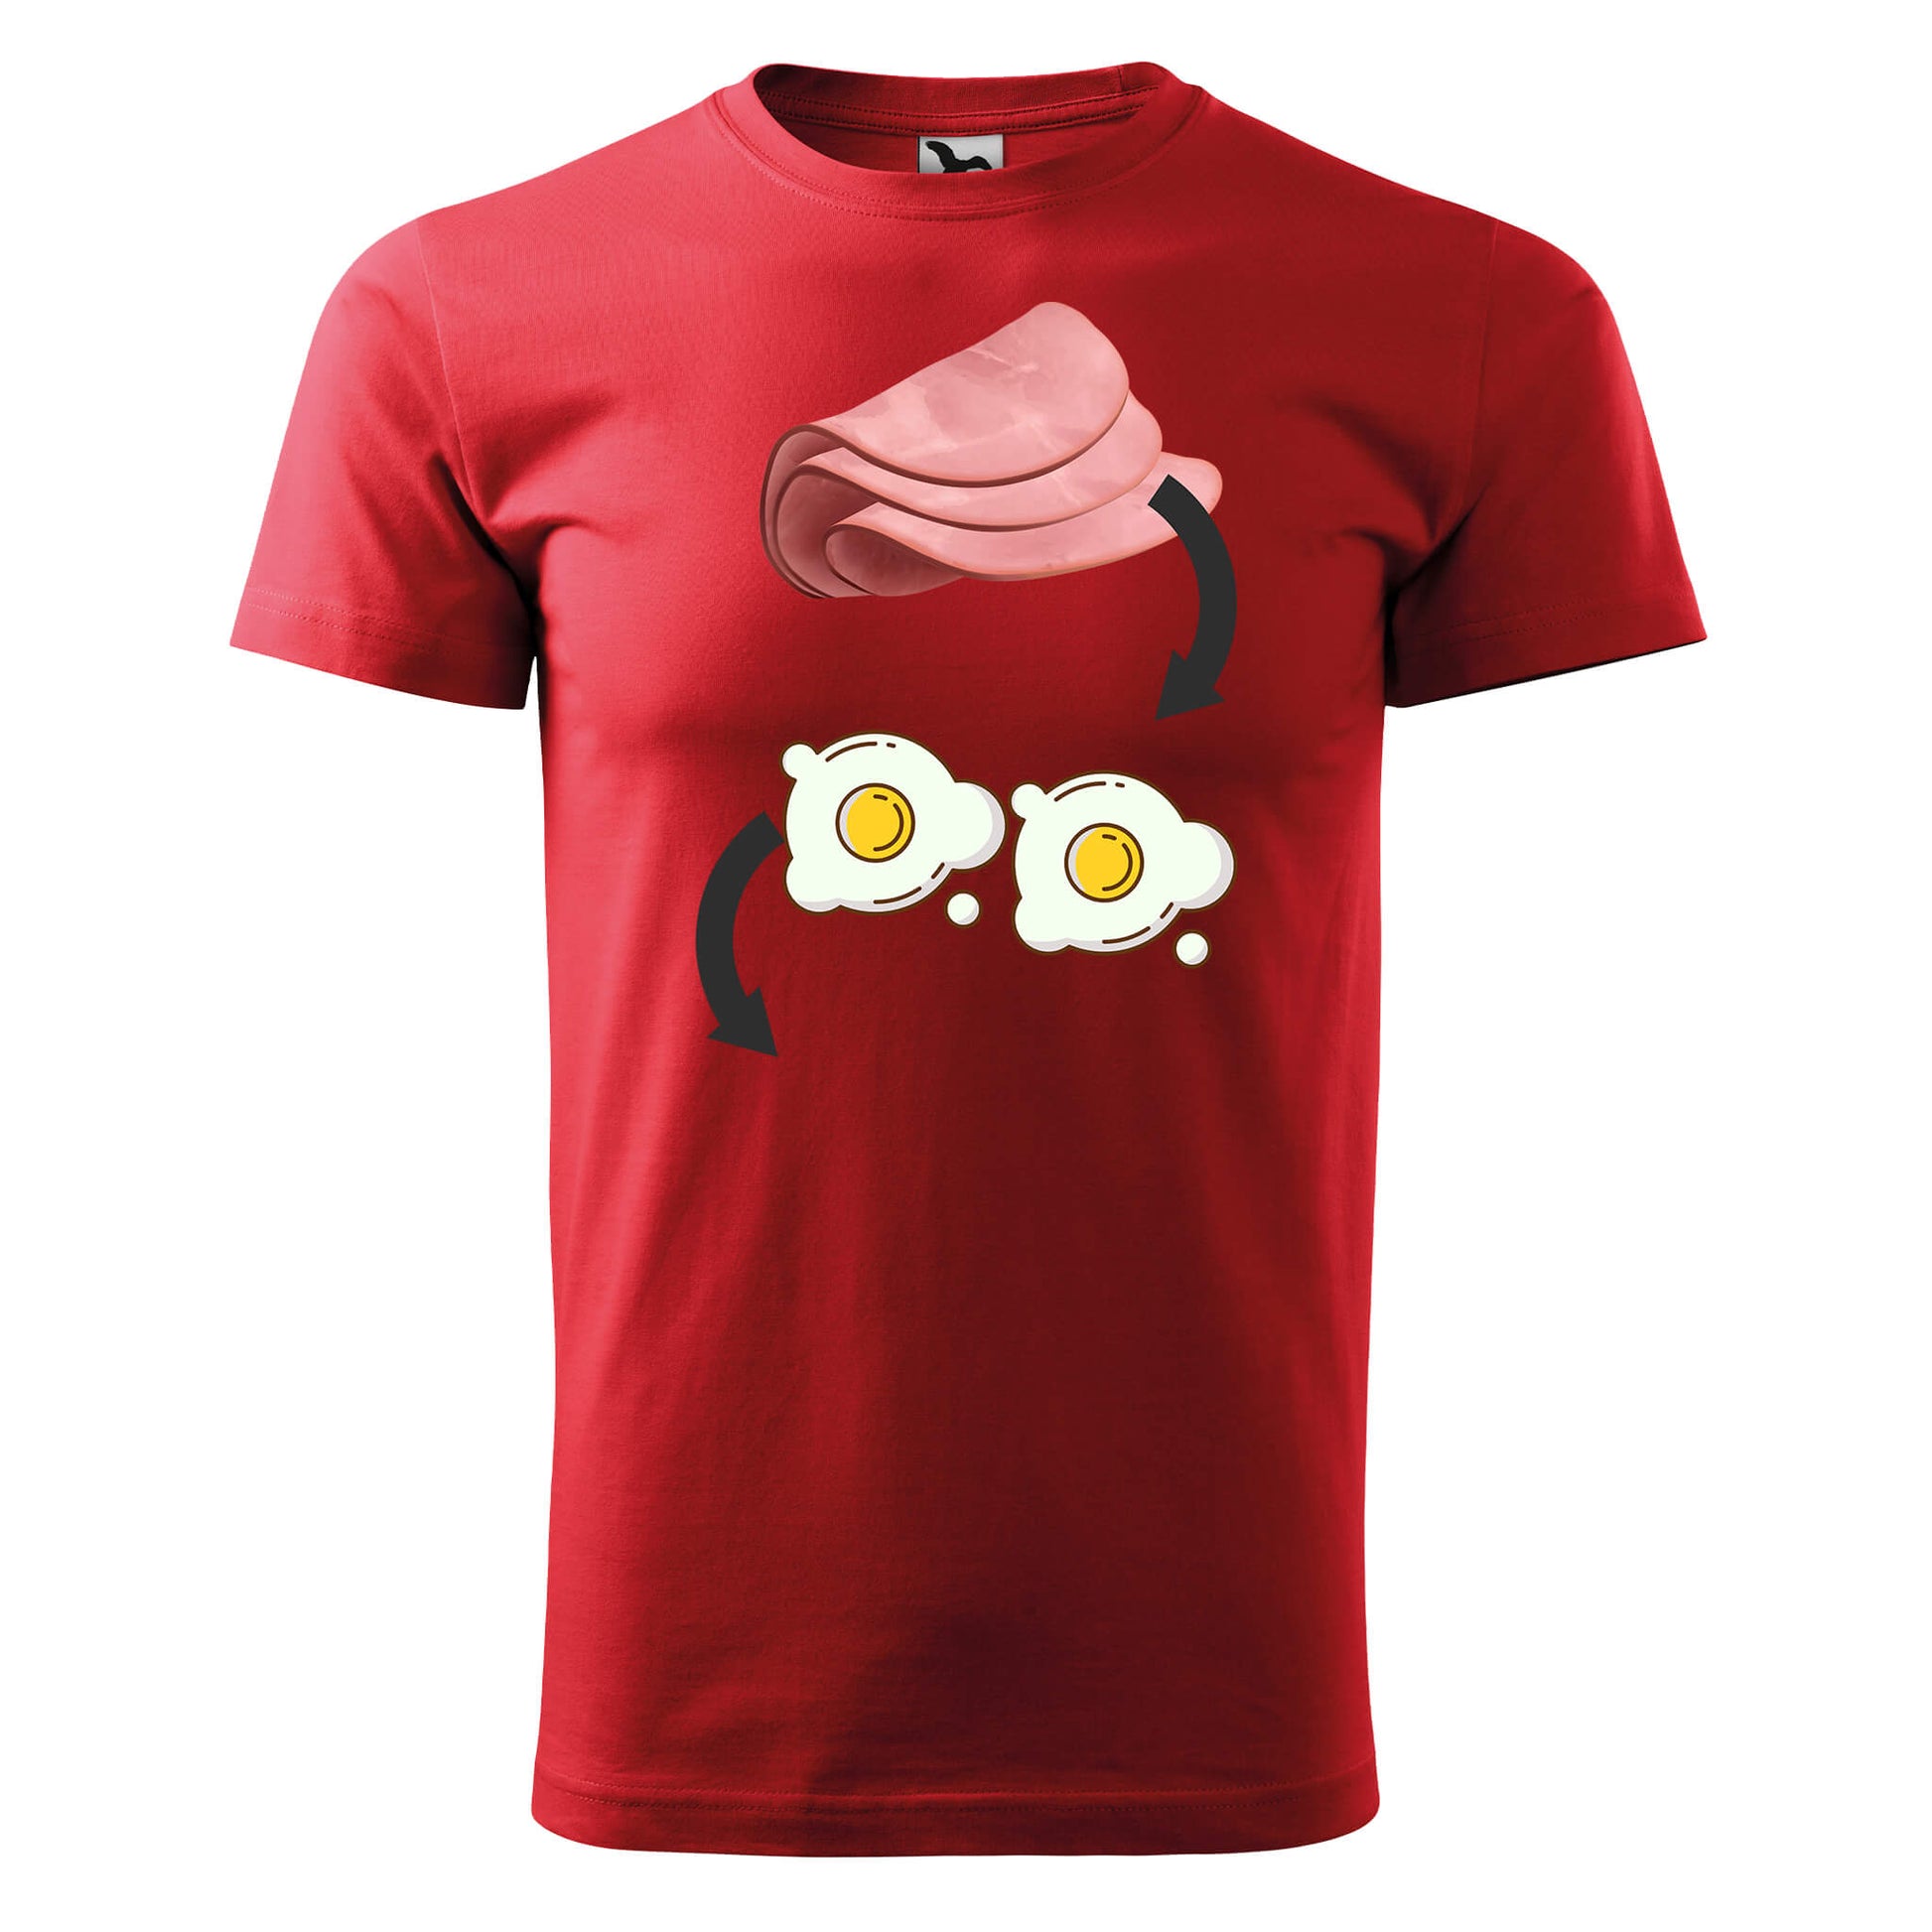 Ham and eggs t-shirt - rvdesignprint